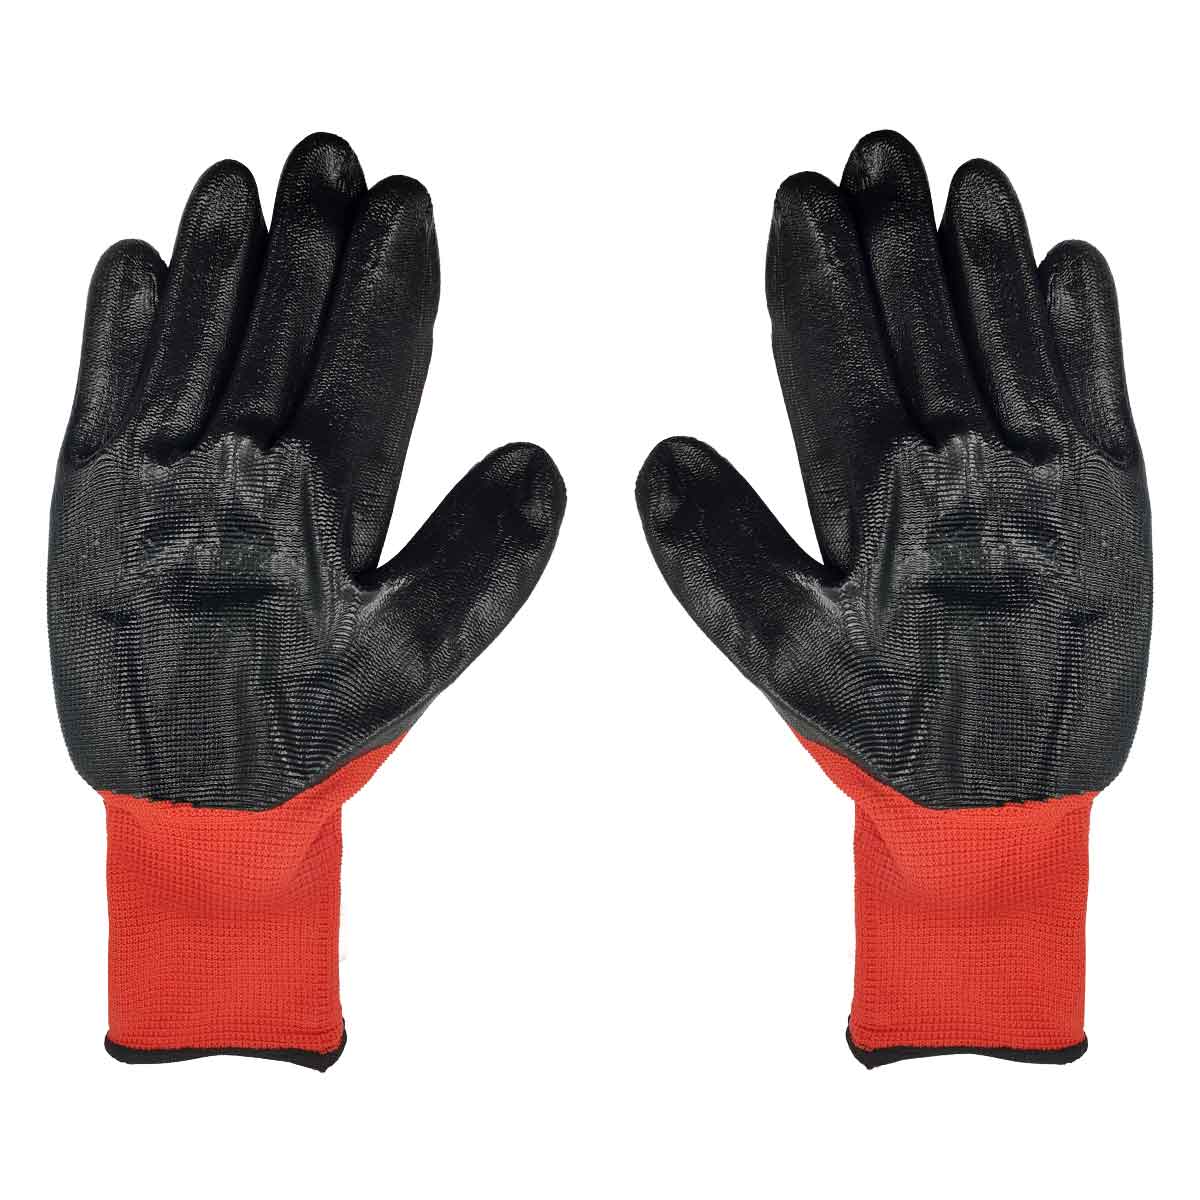 palmas guantes negros rojo nitrilo byp gnn09